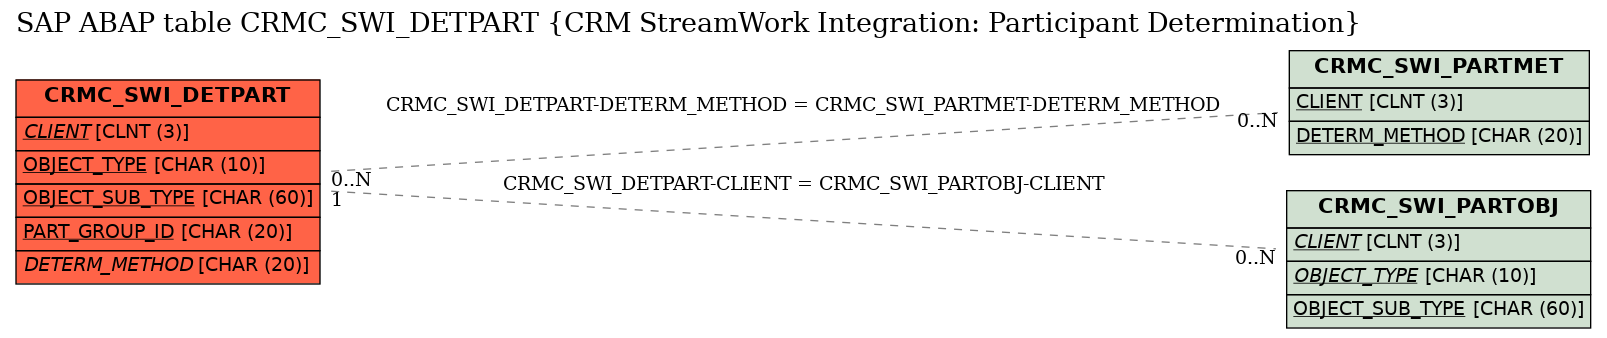 E-R Diagram for table CRMC_SWI_DETPART (CRM StreamWork Integration: Participant Determination)